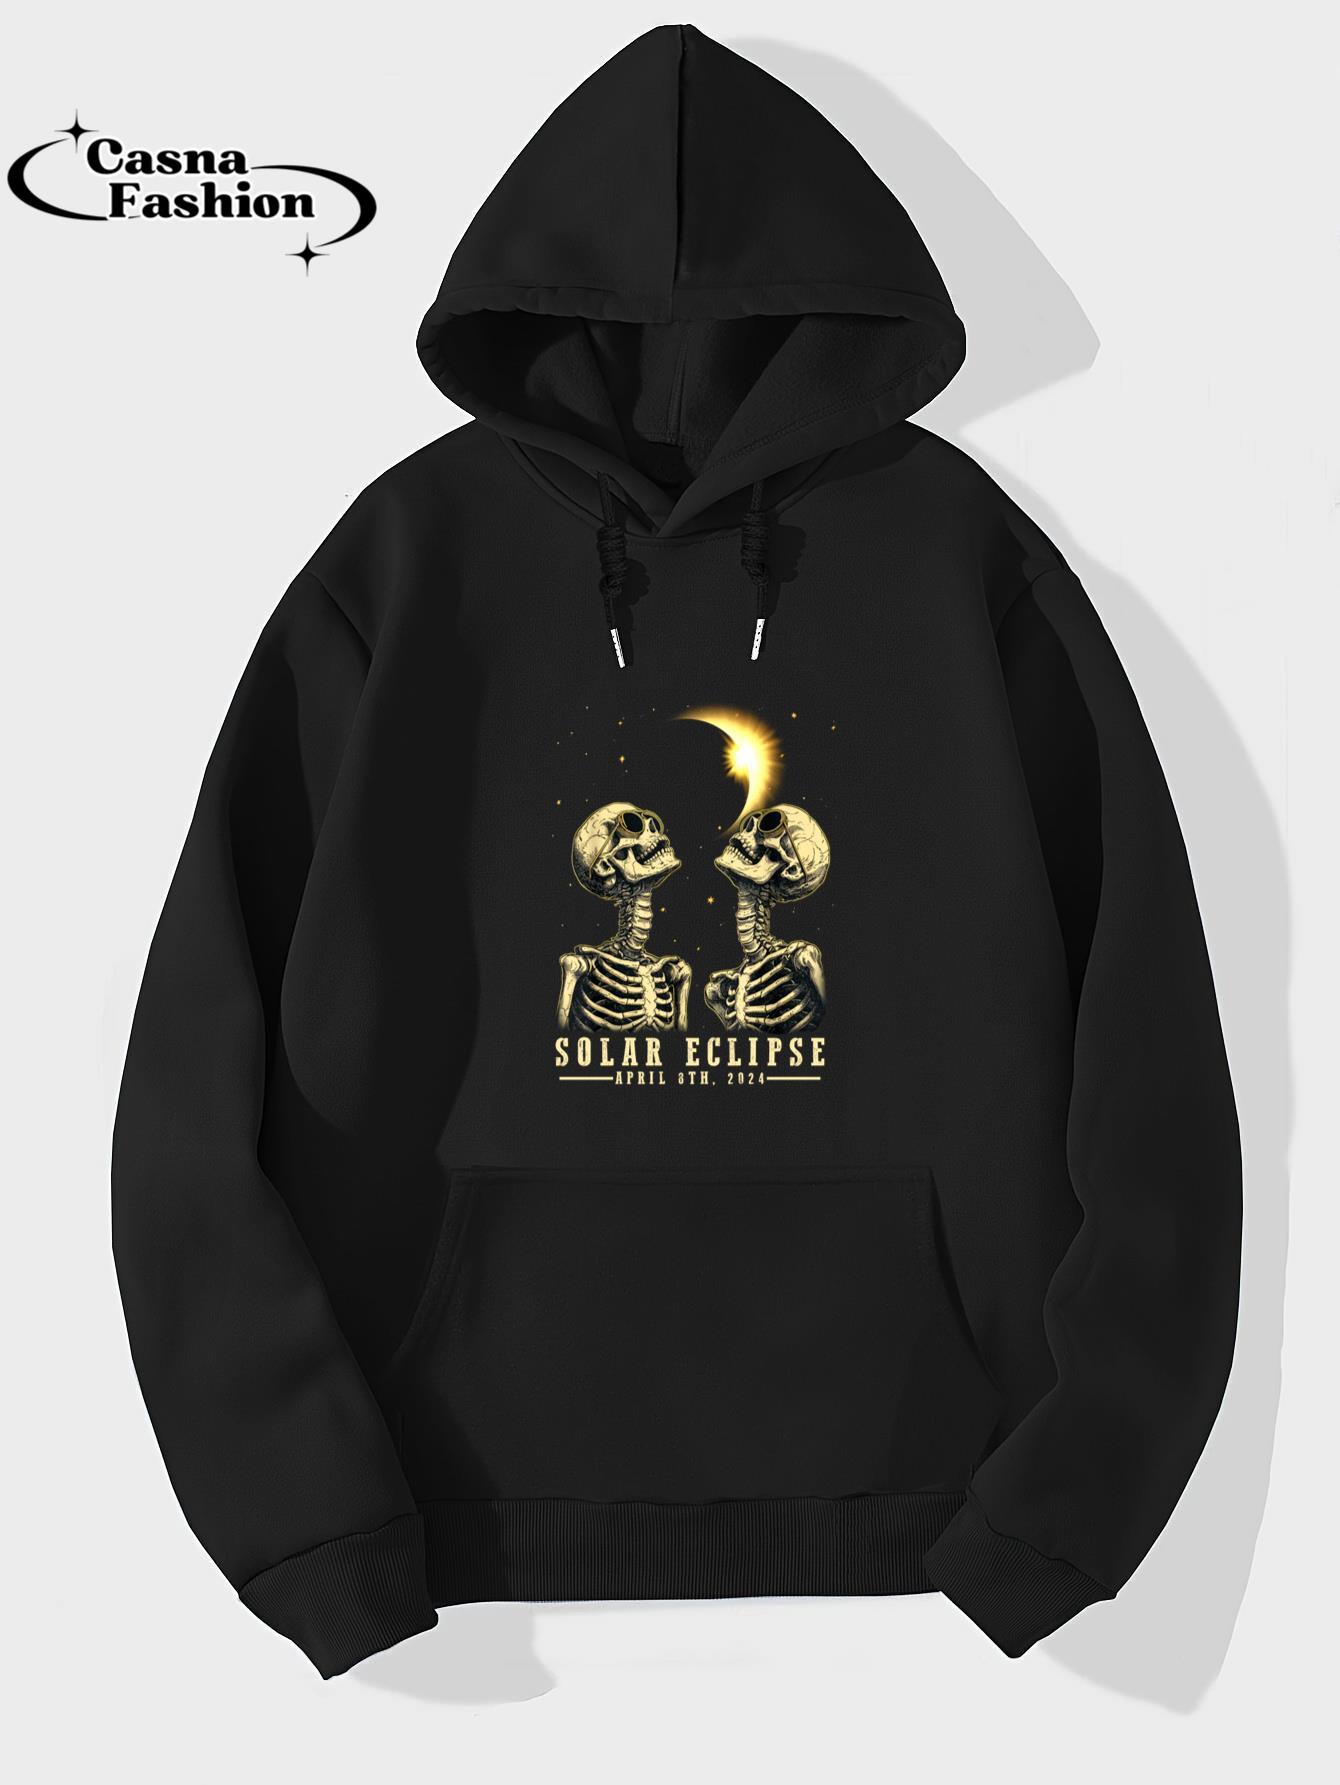 casnafashion_Hoodie_Retro Total Solar Eclipse 2024 Skeleten Shirt For Men Women Sweatshirt_hoodie_black hoodie